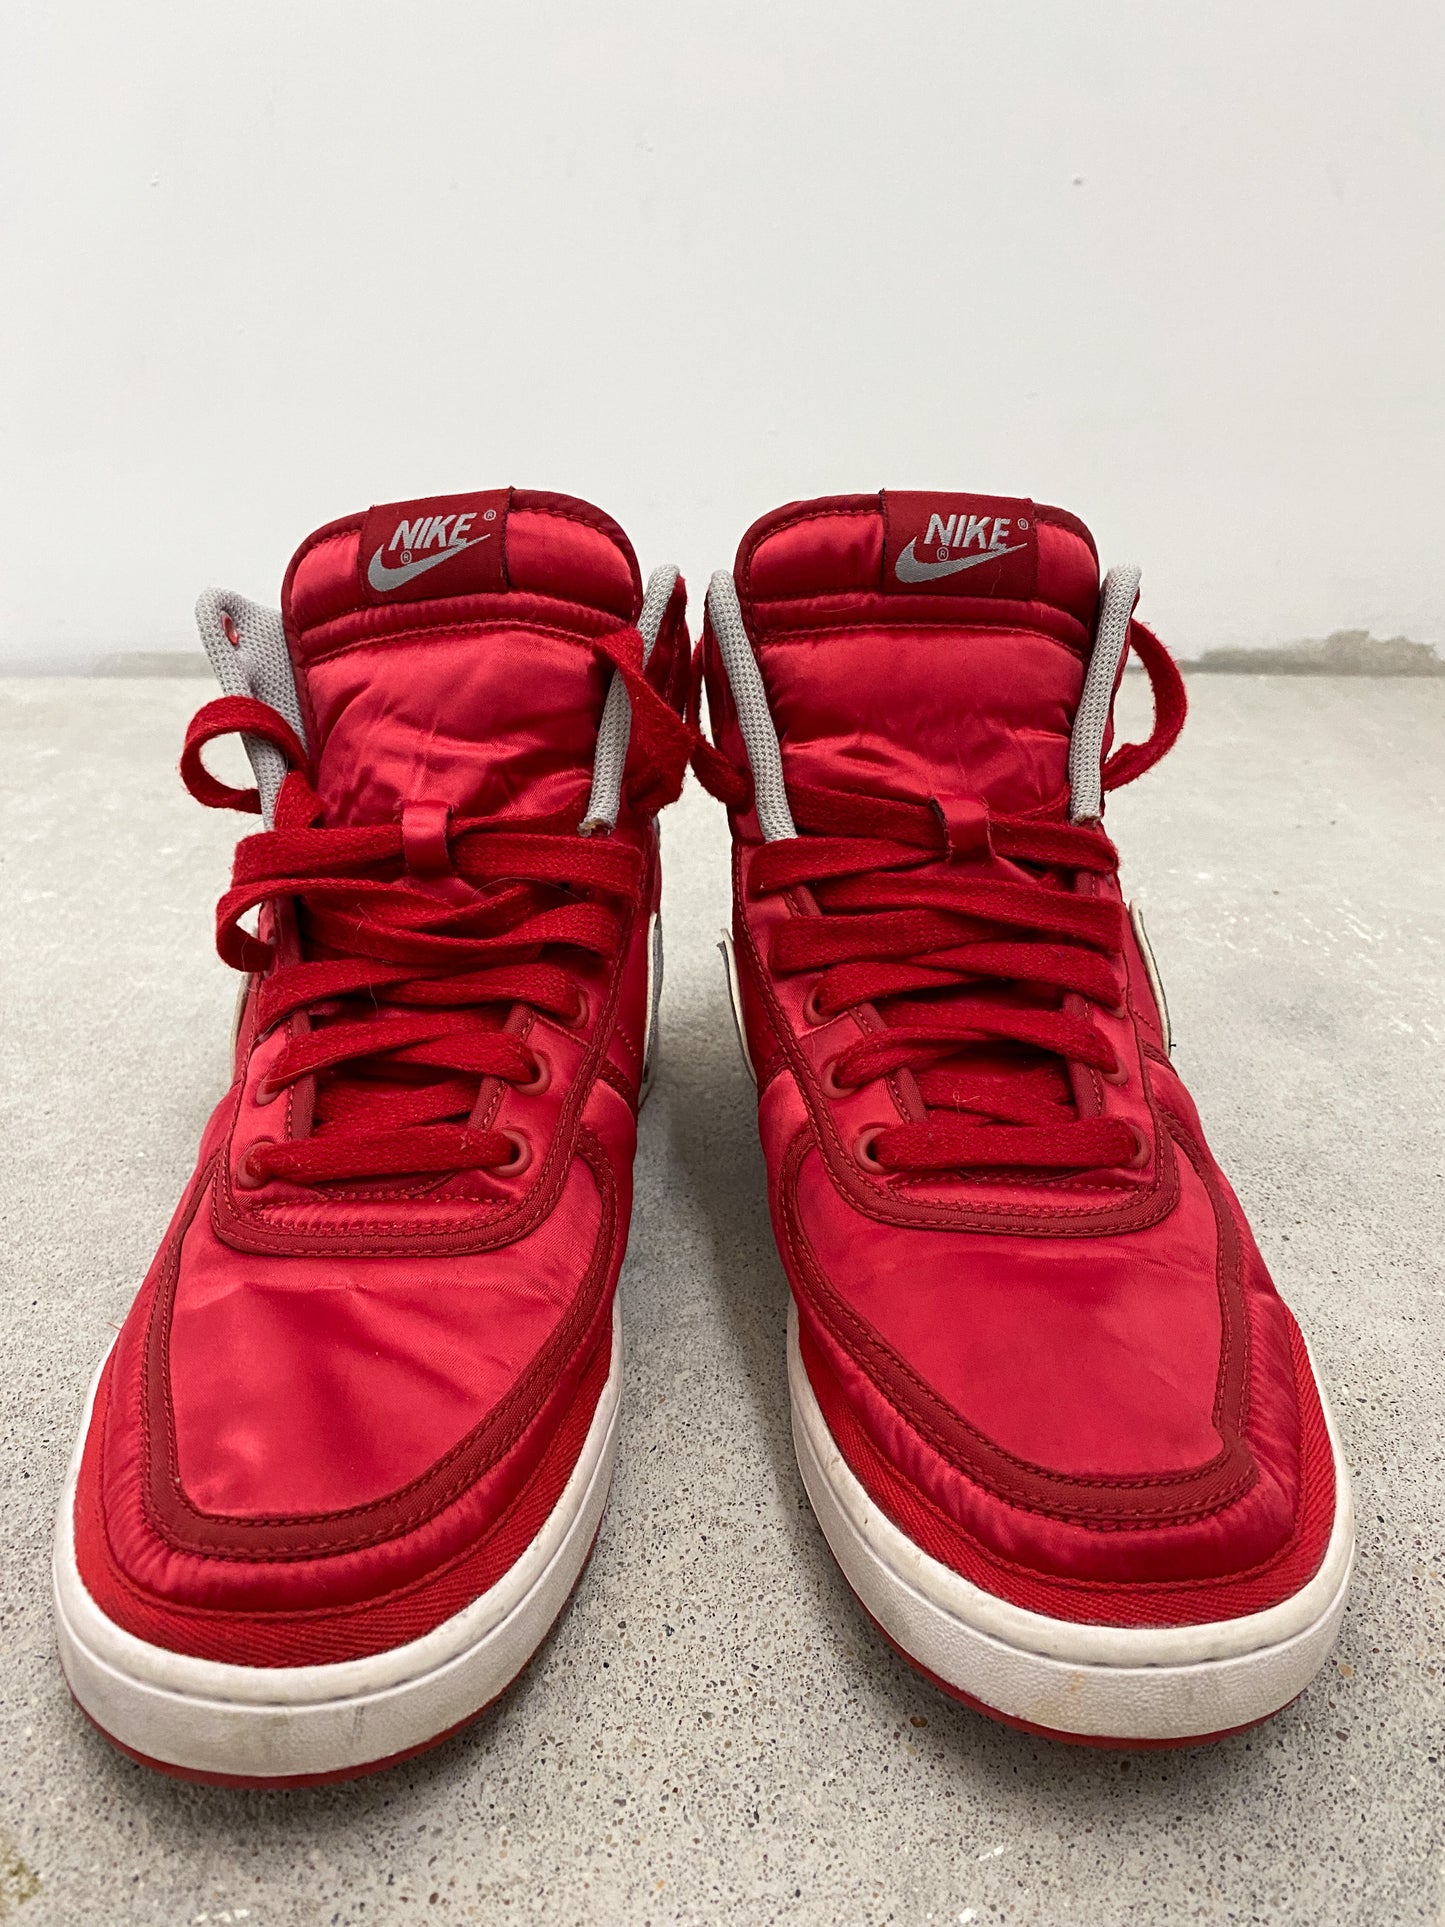 Nike Blazer Mid Vintage Red Metallic Sneakers (Size 10)